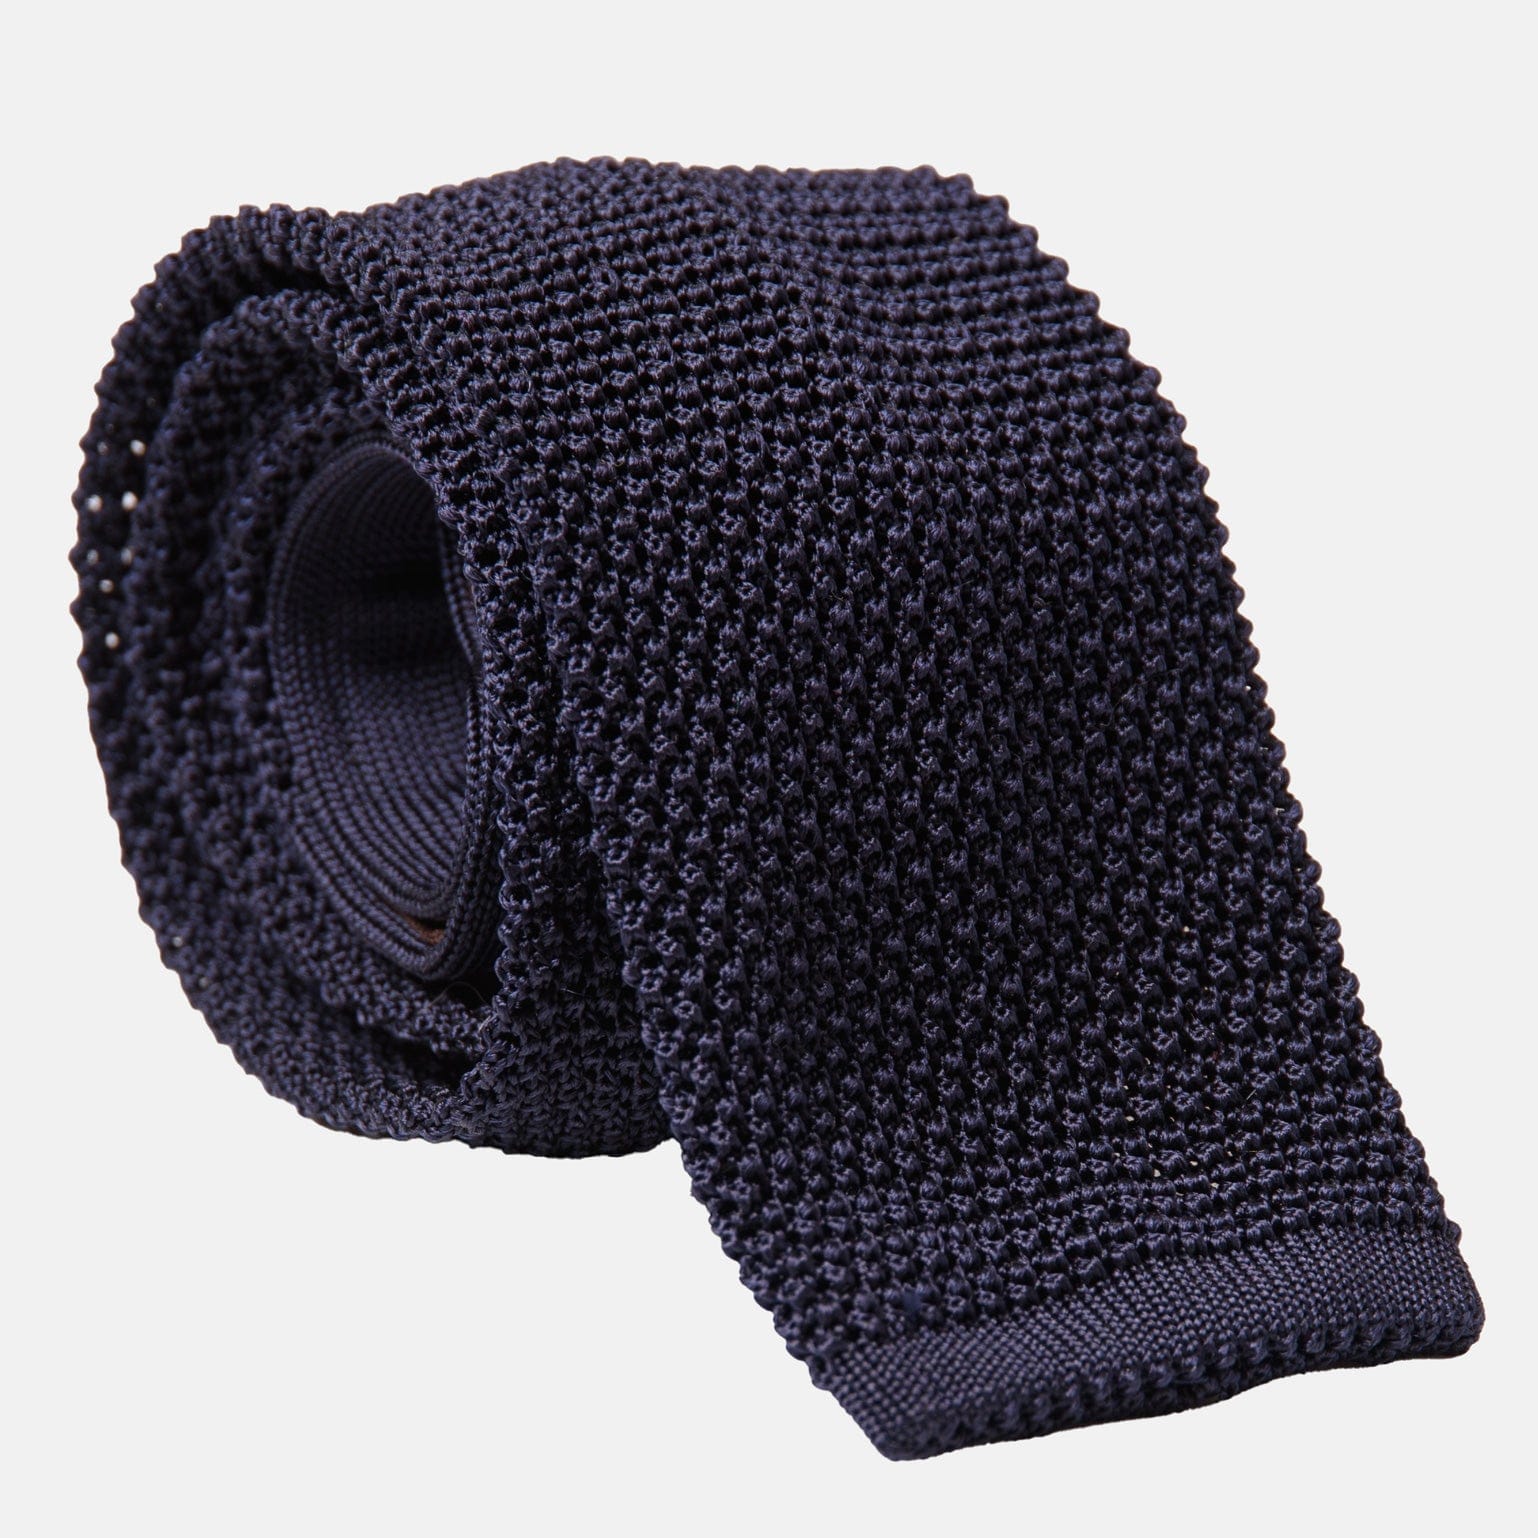 Handmade Italian Navy Knitted Silk Tie